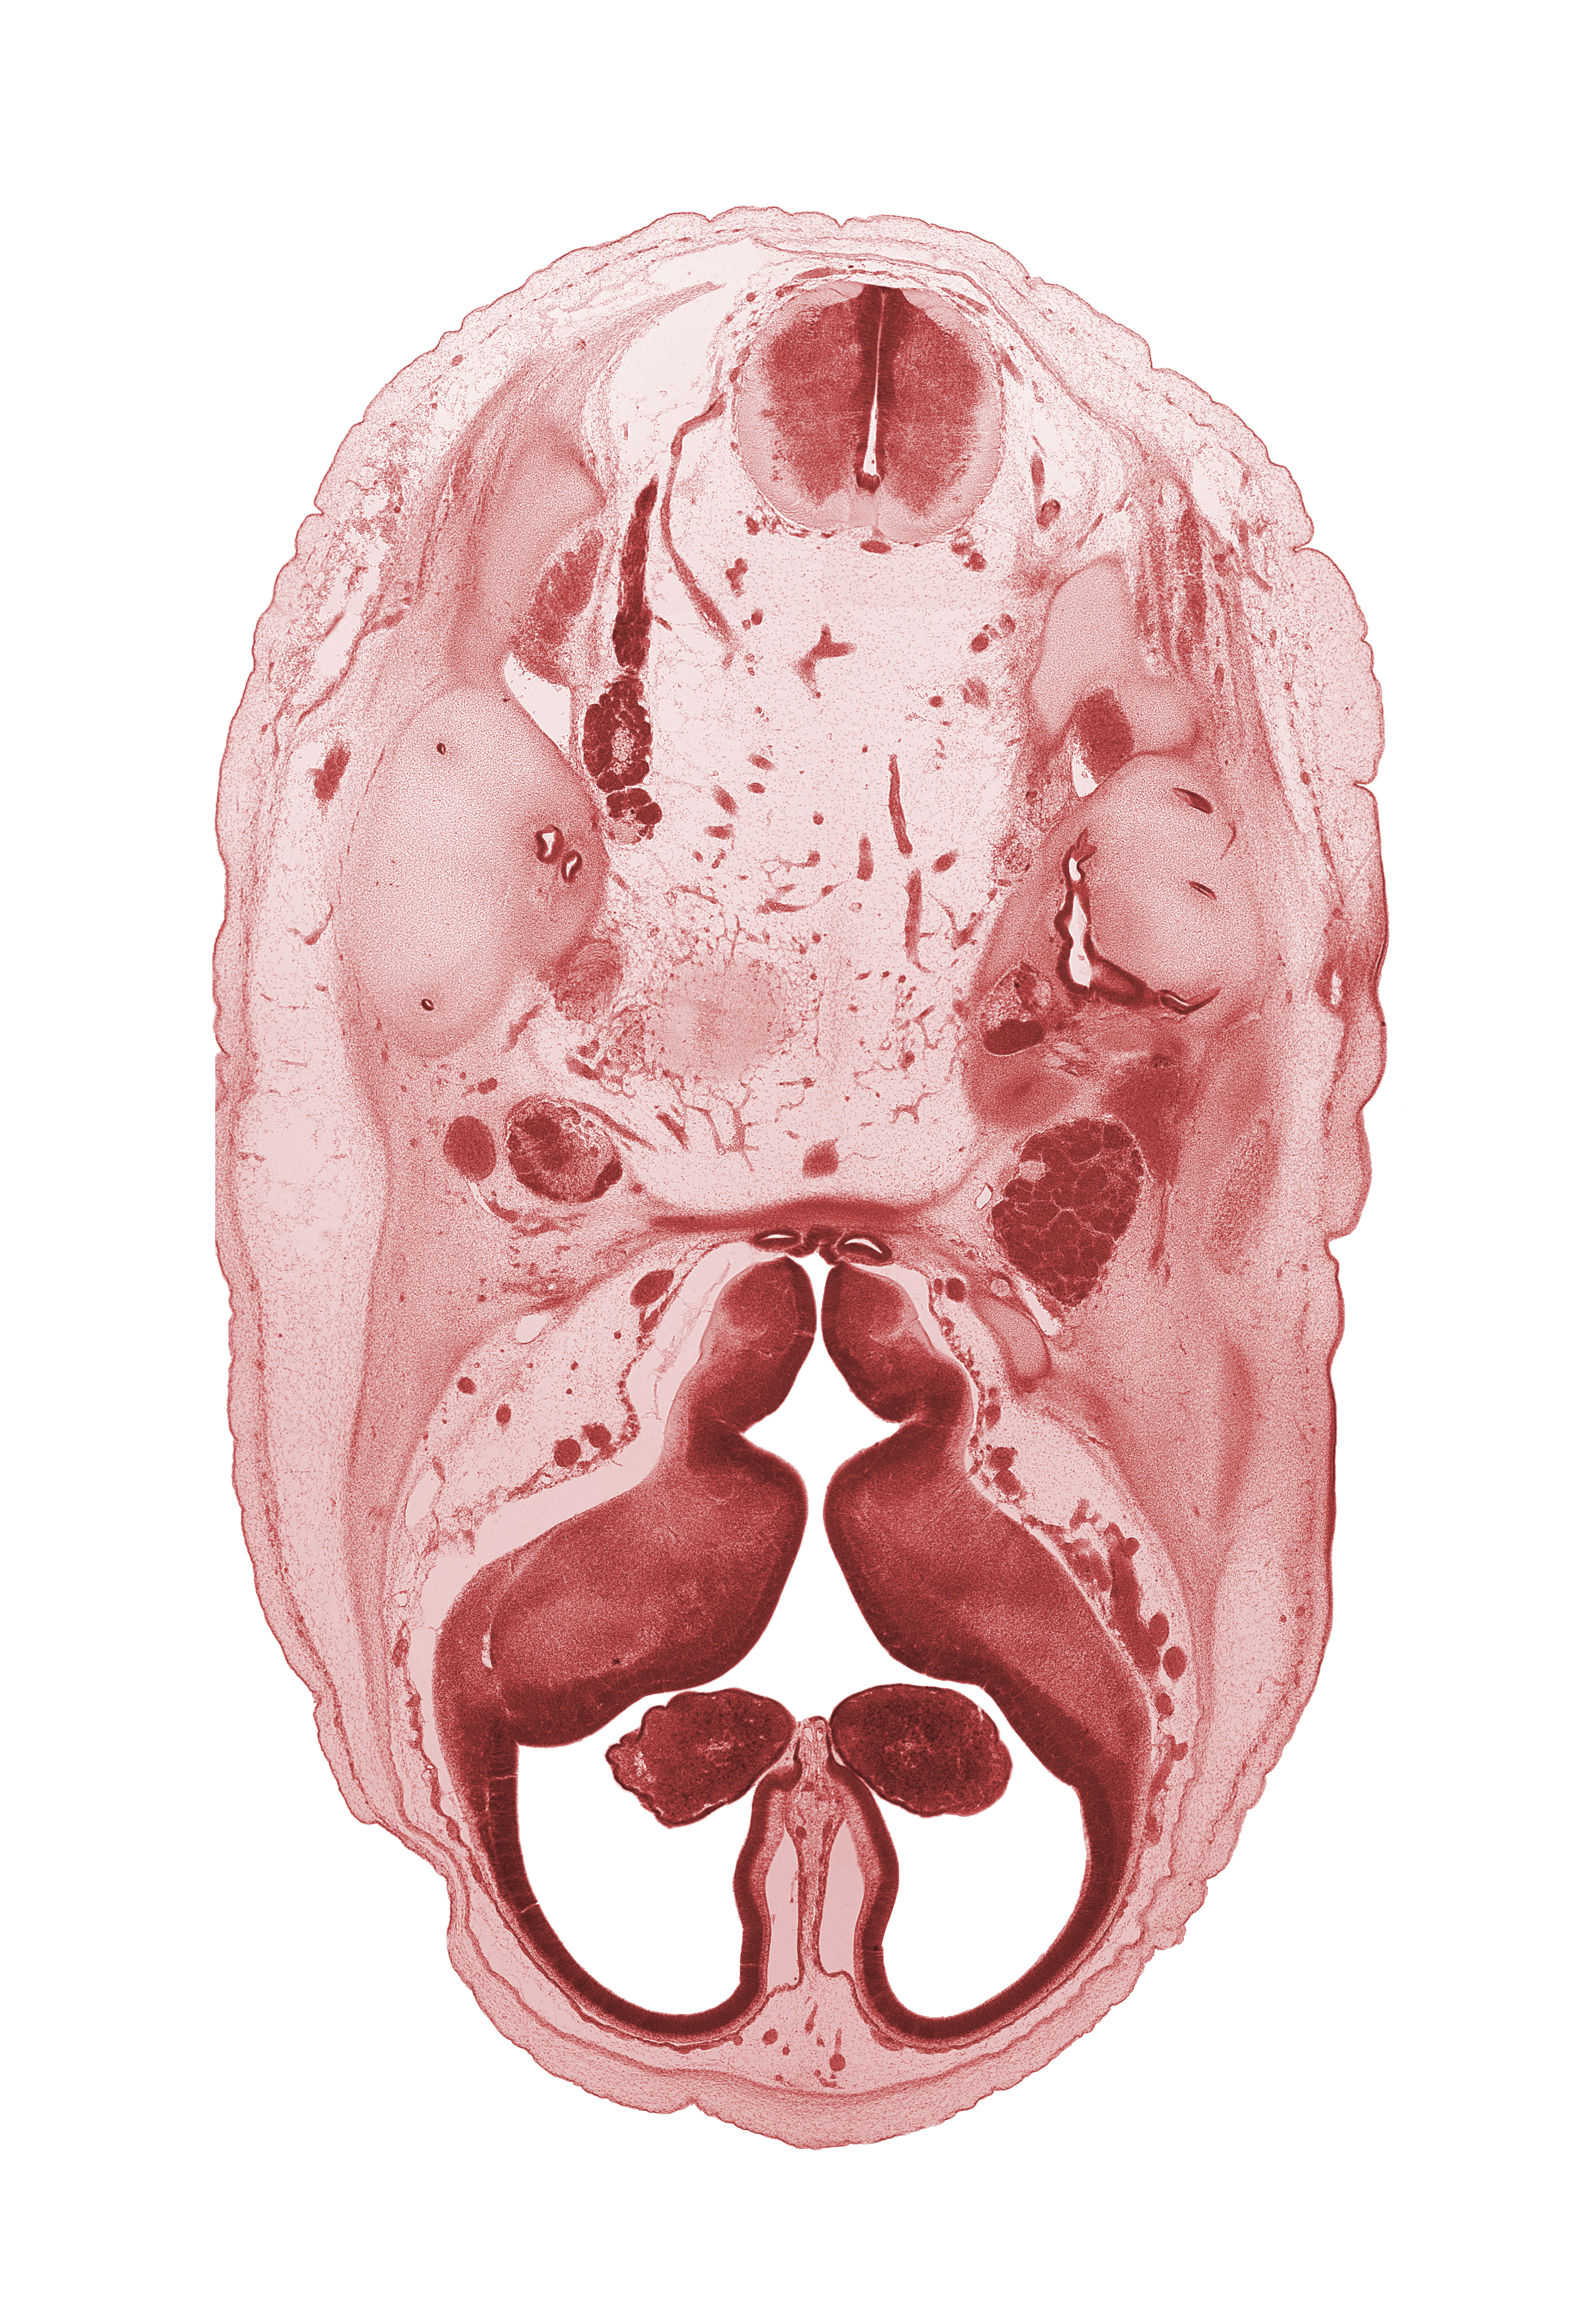 basilar artery, central canal, corpus striatum, edge of pons region (metencephalon), facial nerve (CN VII), glossopharyngeal nerve (CN IX), hippocampus, hypothalamus, intermediate zone, internal carotid artery, internal jugular vein, interventricular foramen, junction of brain and spinal cord, marginal zone, medial ventricular eminence (diencephalon), neurohypophysis, optic groove, otic capsule cartilage, root of hypoglossal nerve (CN XII), semicircular duct, trigeminal ganglion (CN V), tuberal part of adenohypophysis, vagus nerve (CN X), ventricular zone